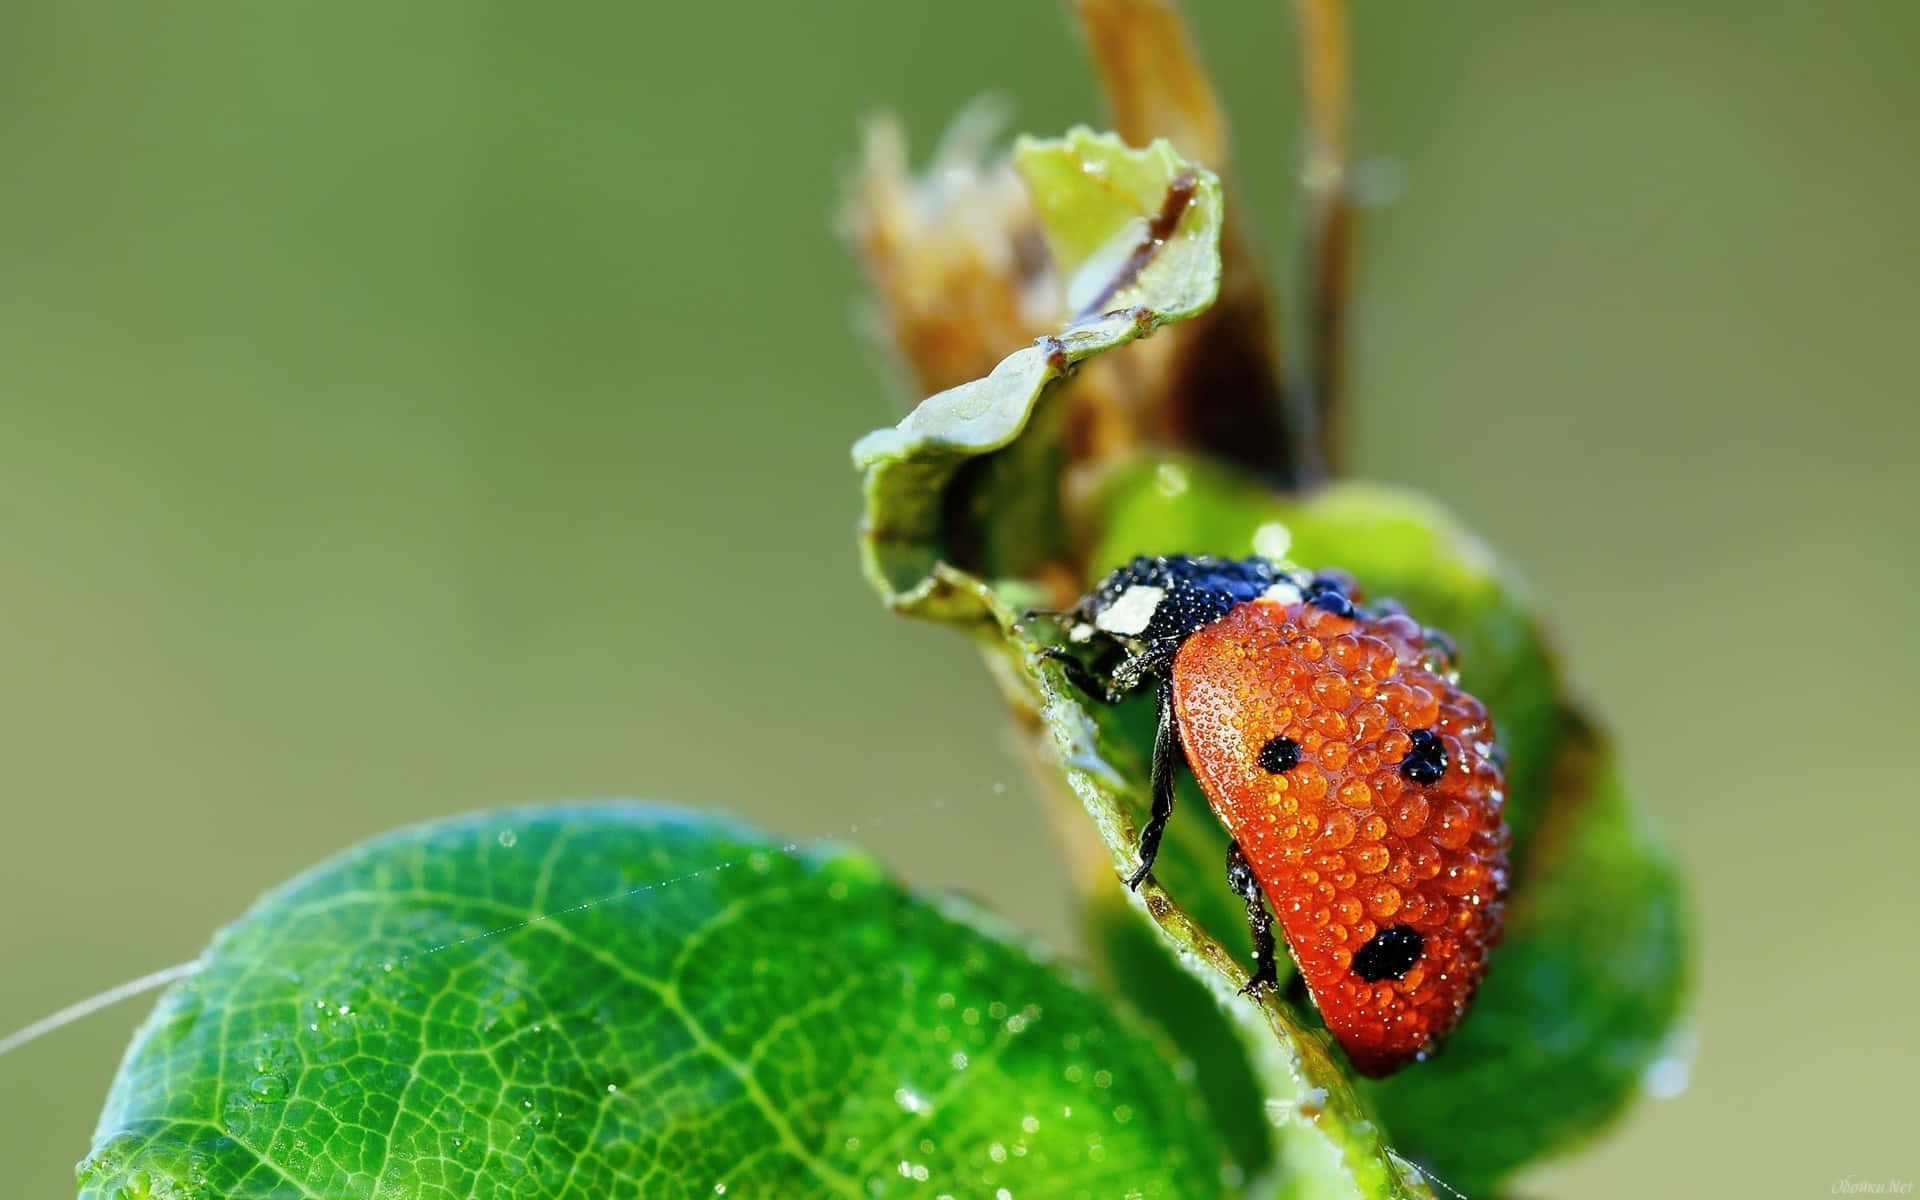 A cute ladybug enjoying the summer sun.